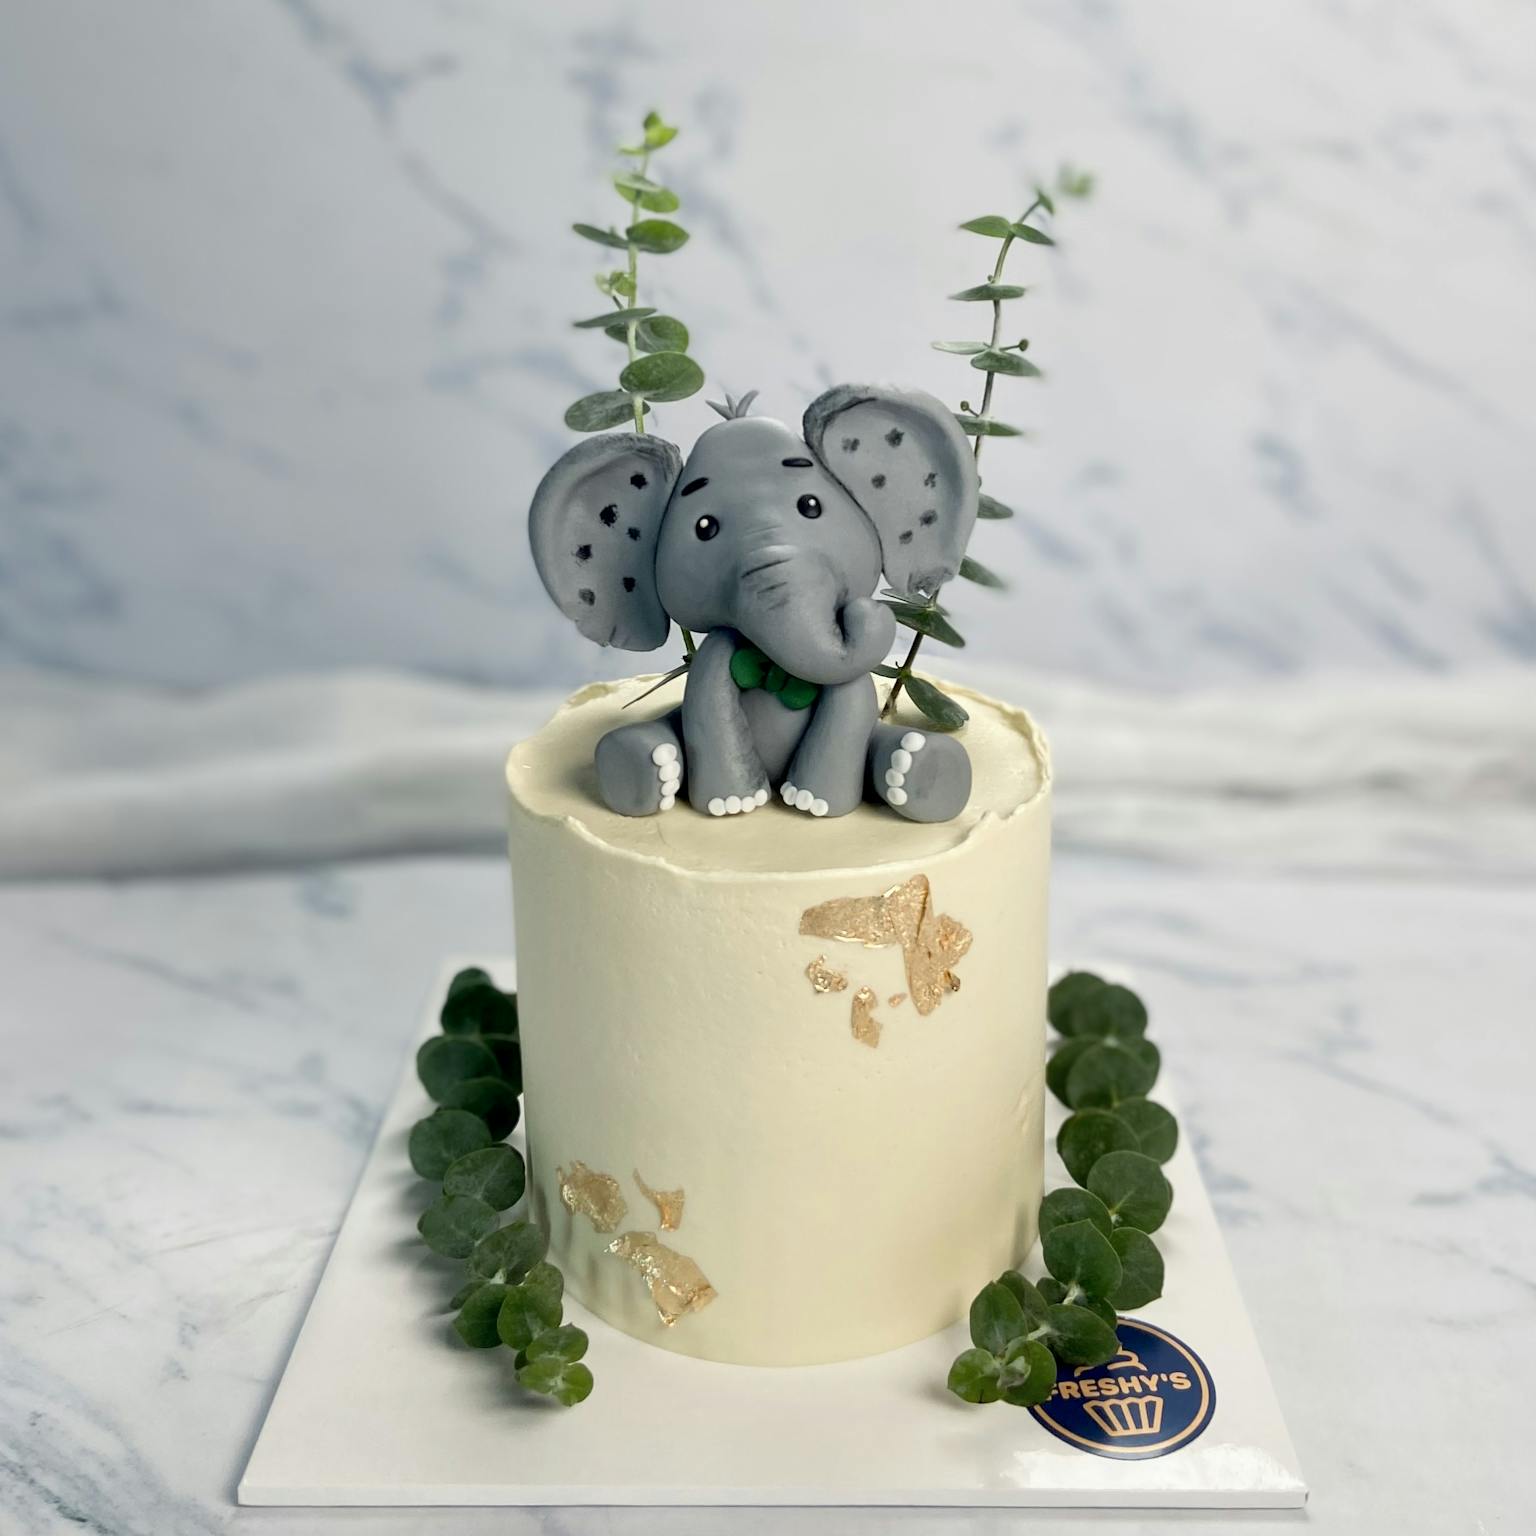 100% edible fondant sculpted elephant cake